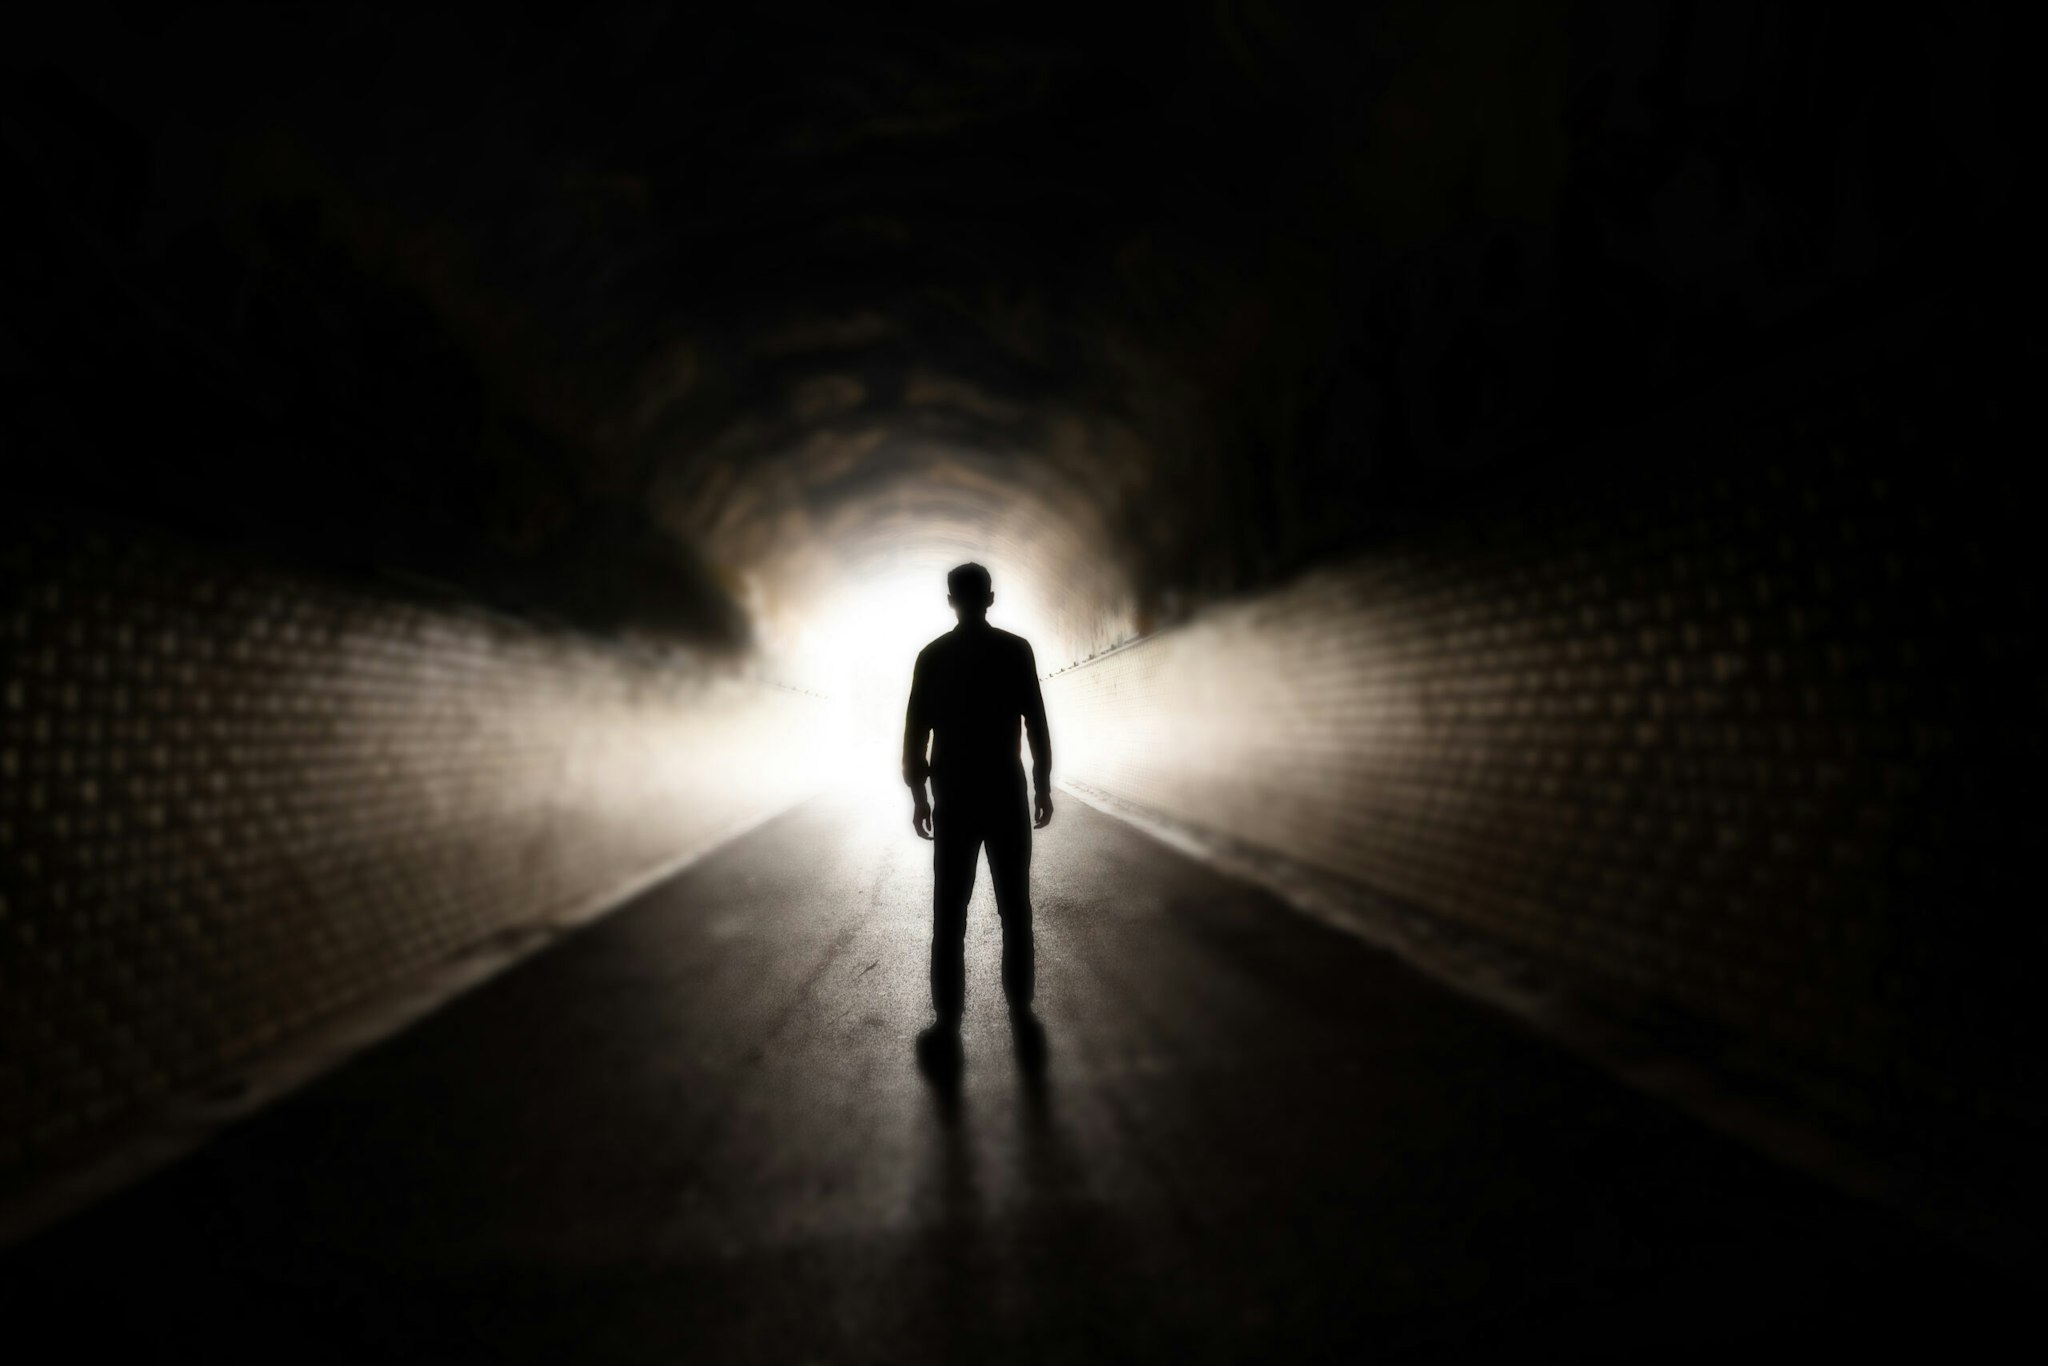 Man walking in dark tunnel - stock photo